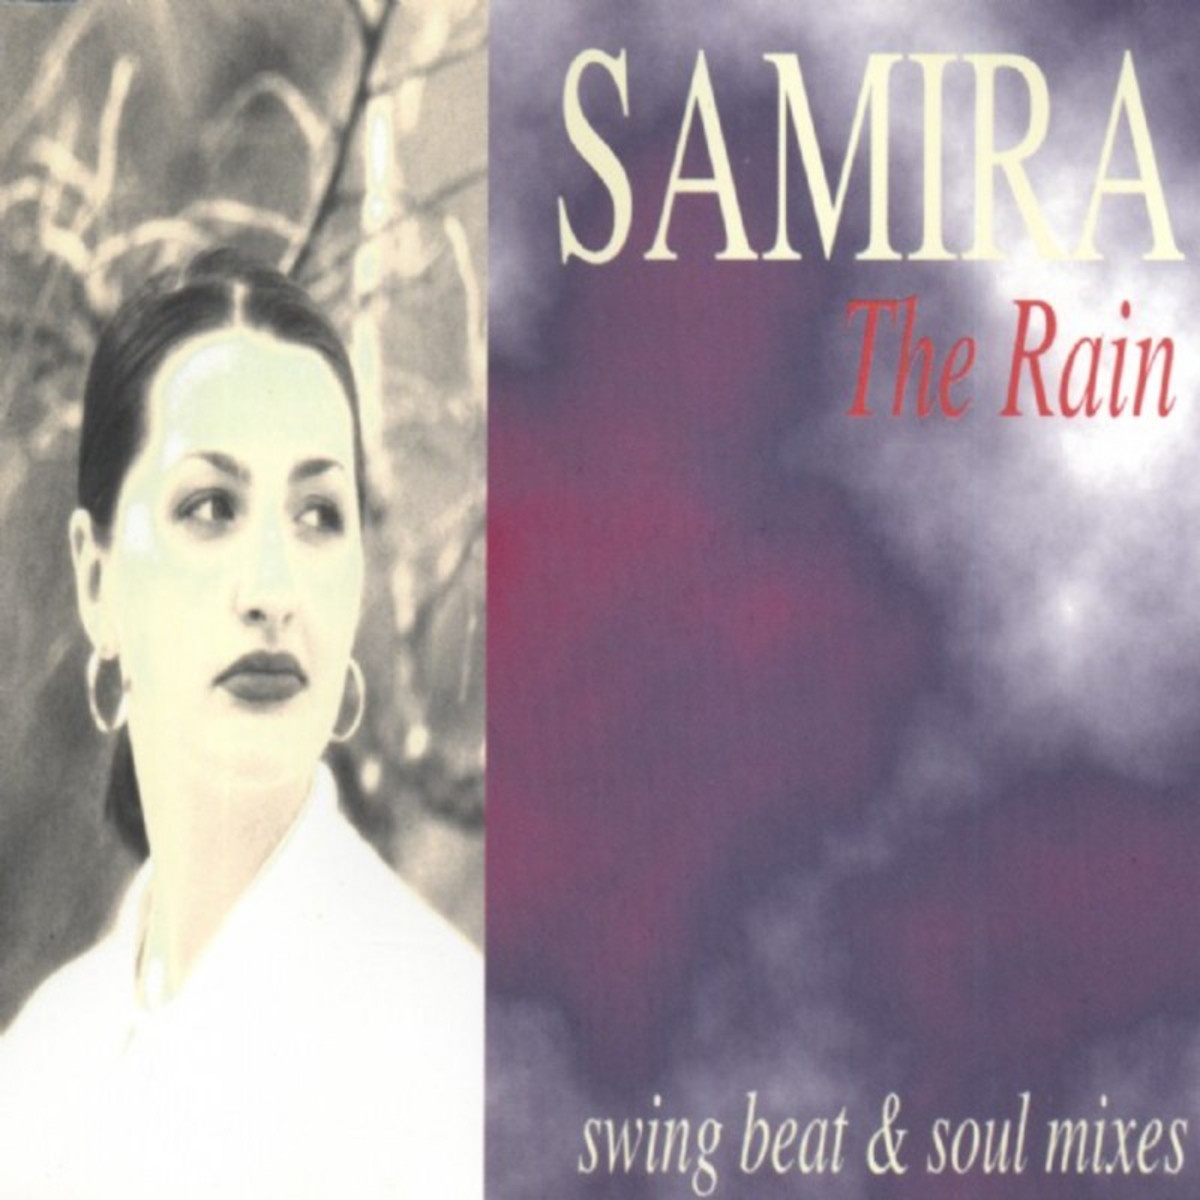 The Rain - Radio Soul Mix